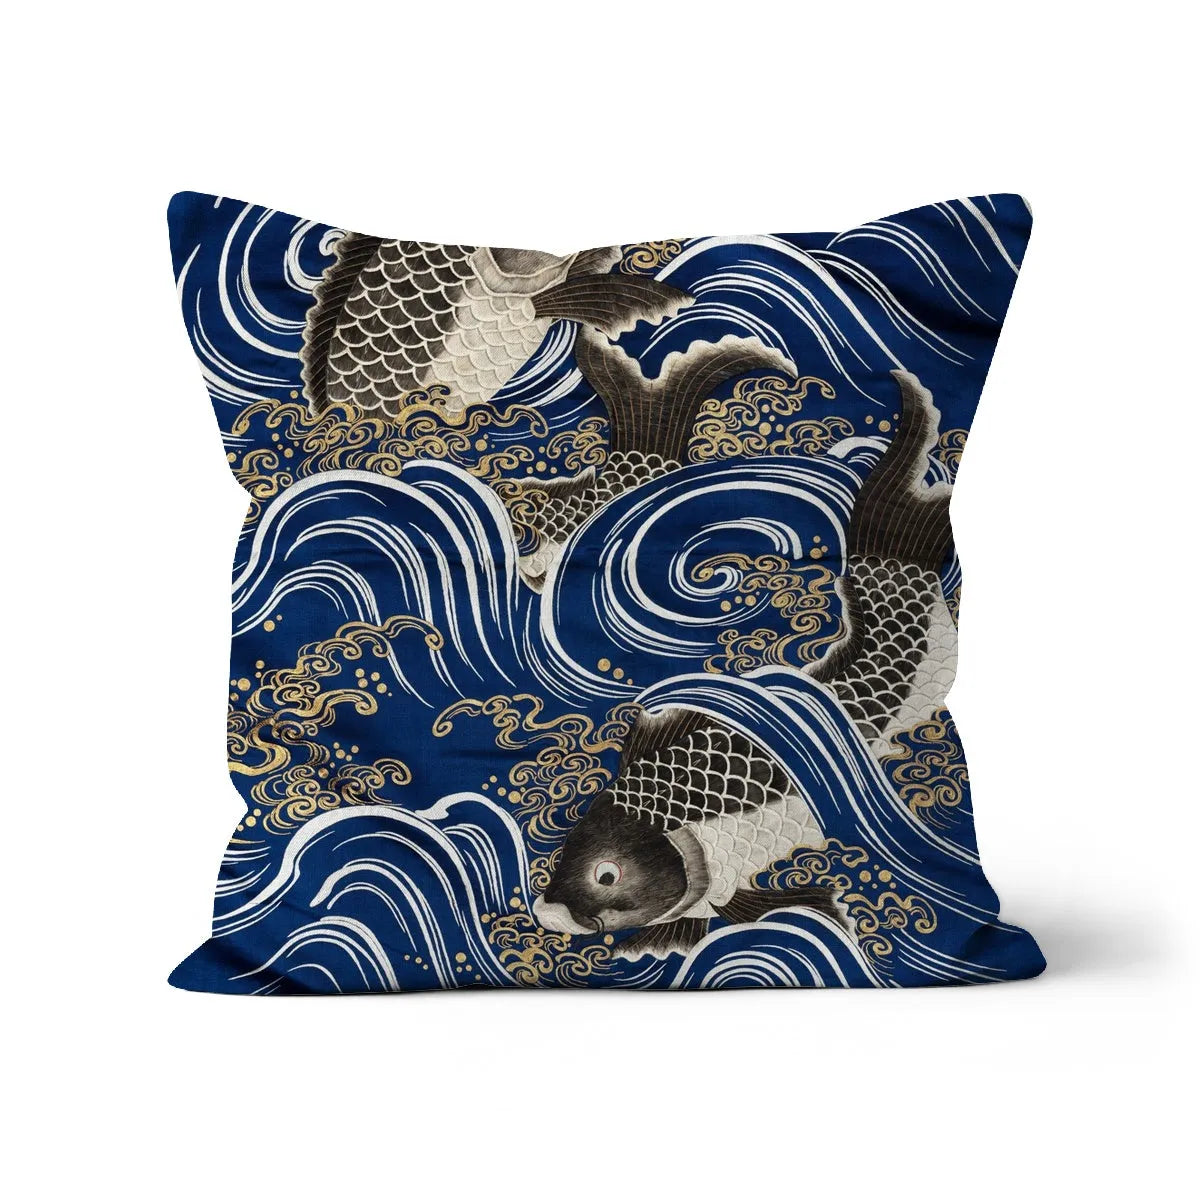 Fukusa And Carp In Waves - Meiji Period Art Pillow - Throw Pillows - Aesthetic Art